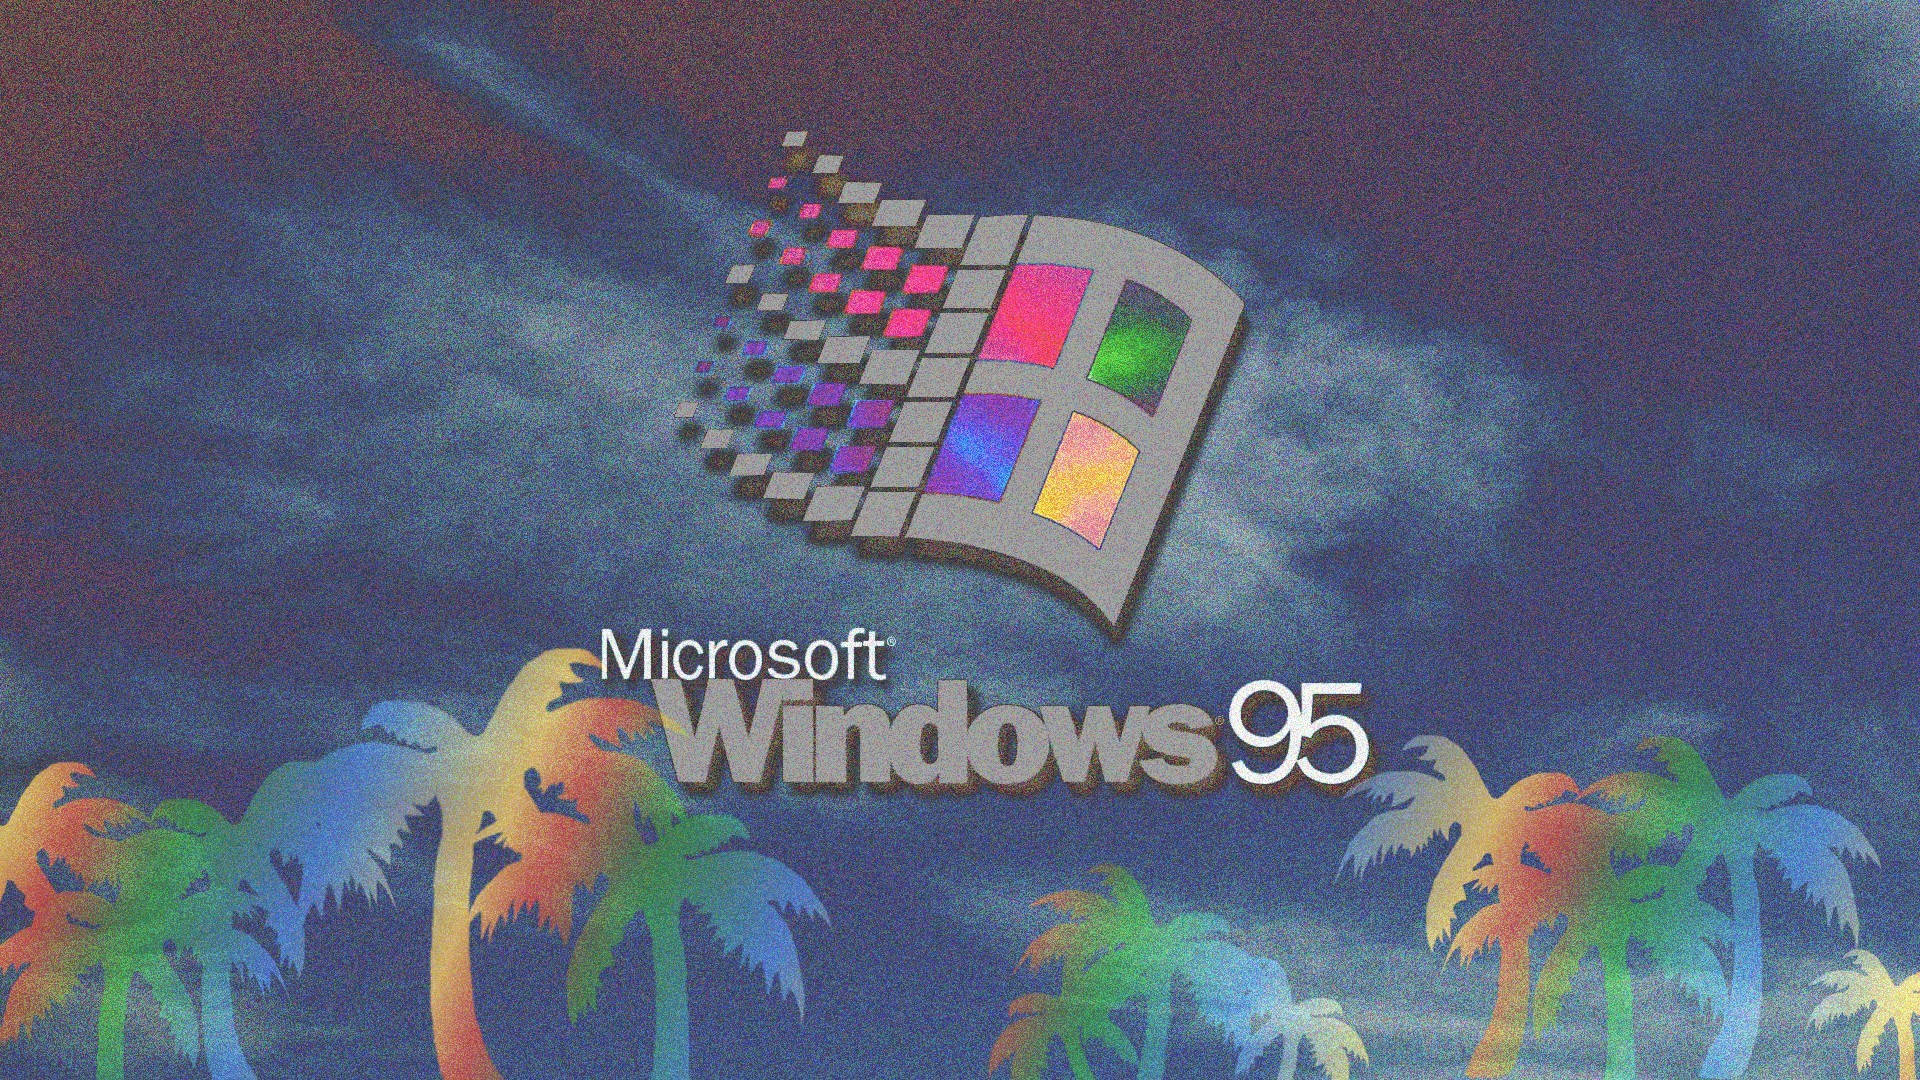 General Microsoft Windows vaporwave palm trees Windows 95